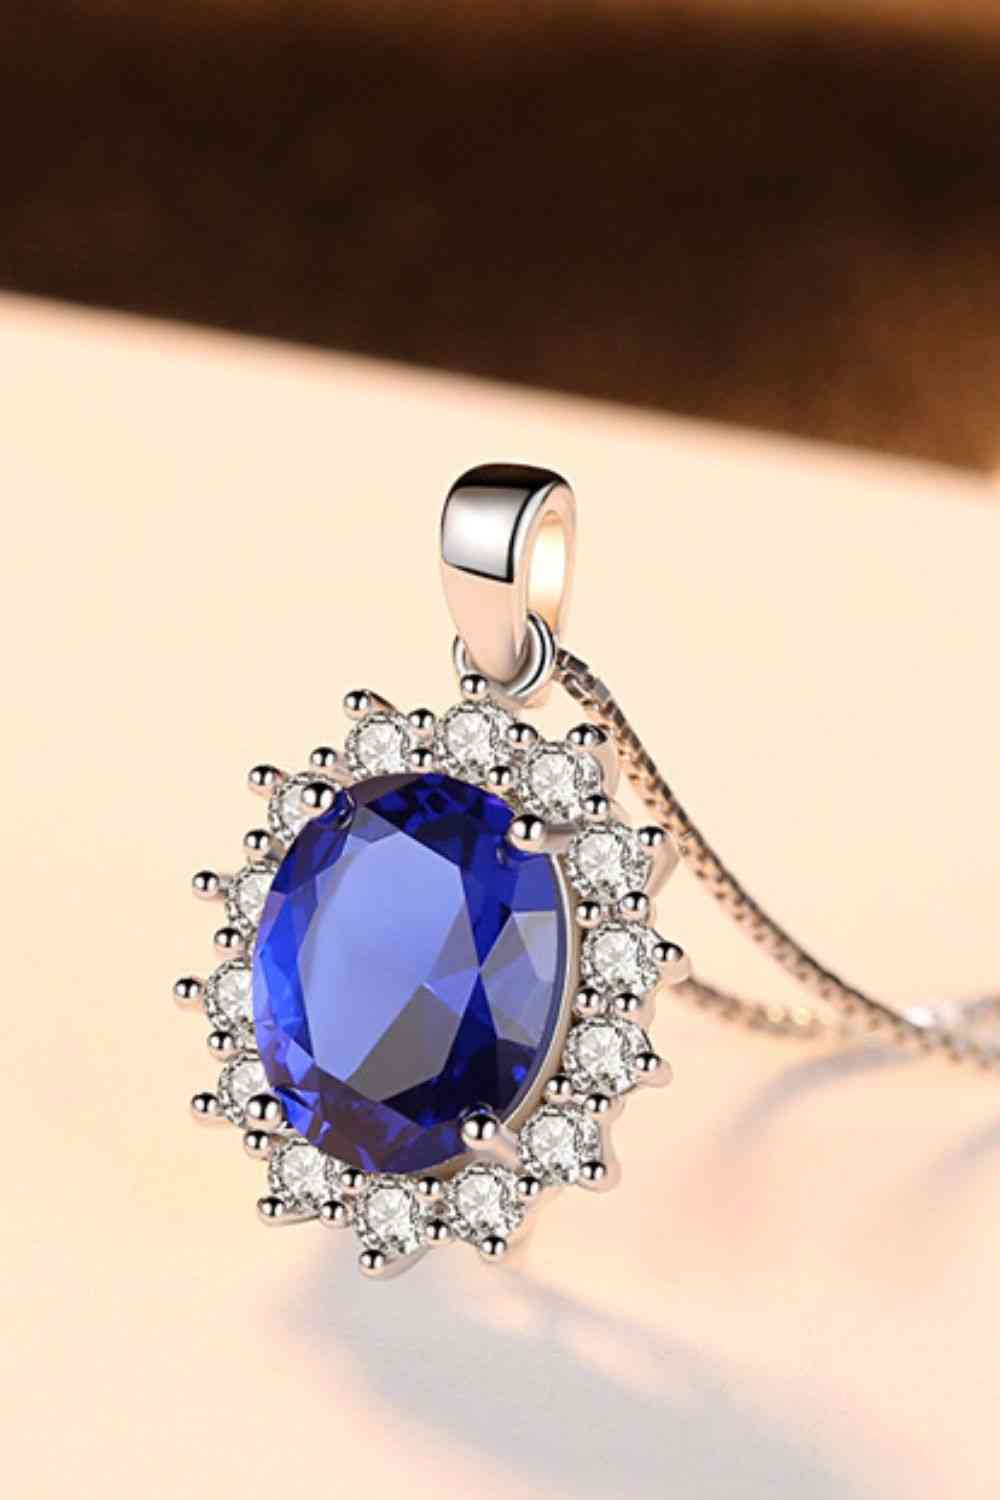 Synthetic Sapphire Pendant 925 Sterling Silver Necklace - Pahabu - Women Fashion & Jewelry